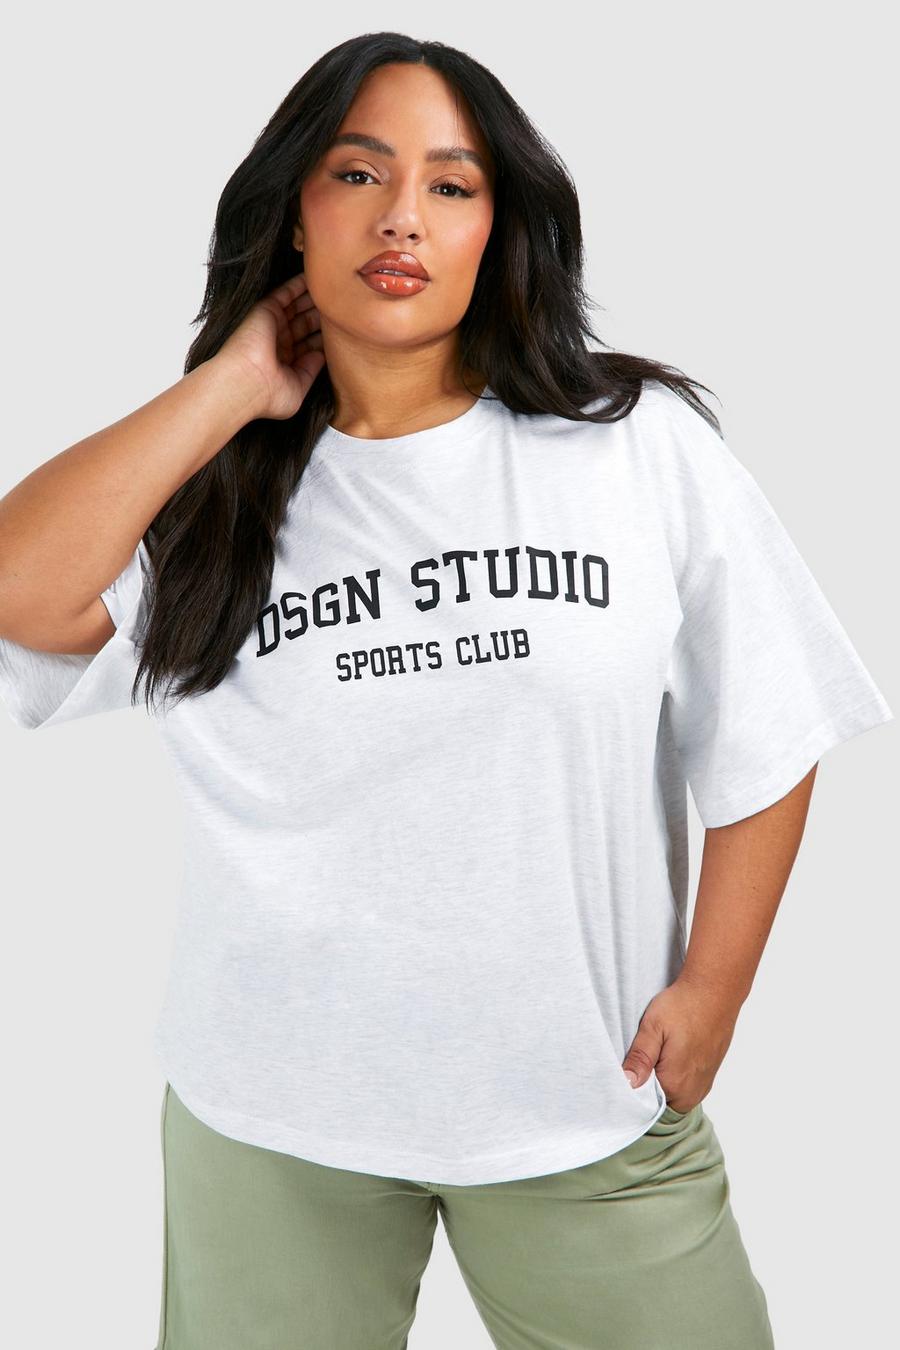 Plus Oversize T-Shirt mit Dsgn Studio Sports Club Print, Ash grey